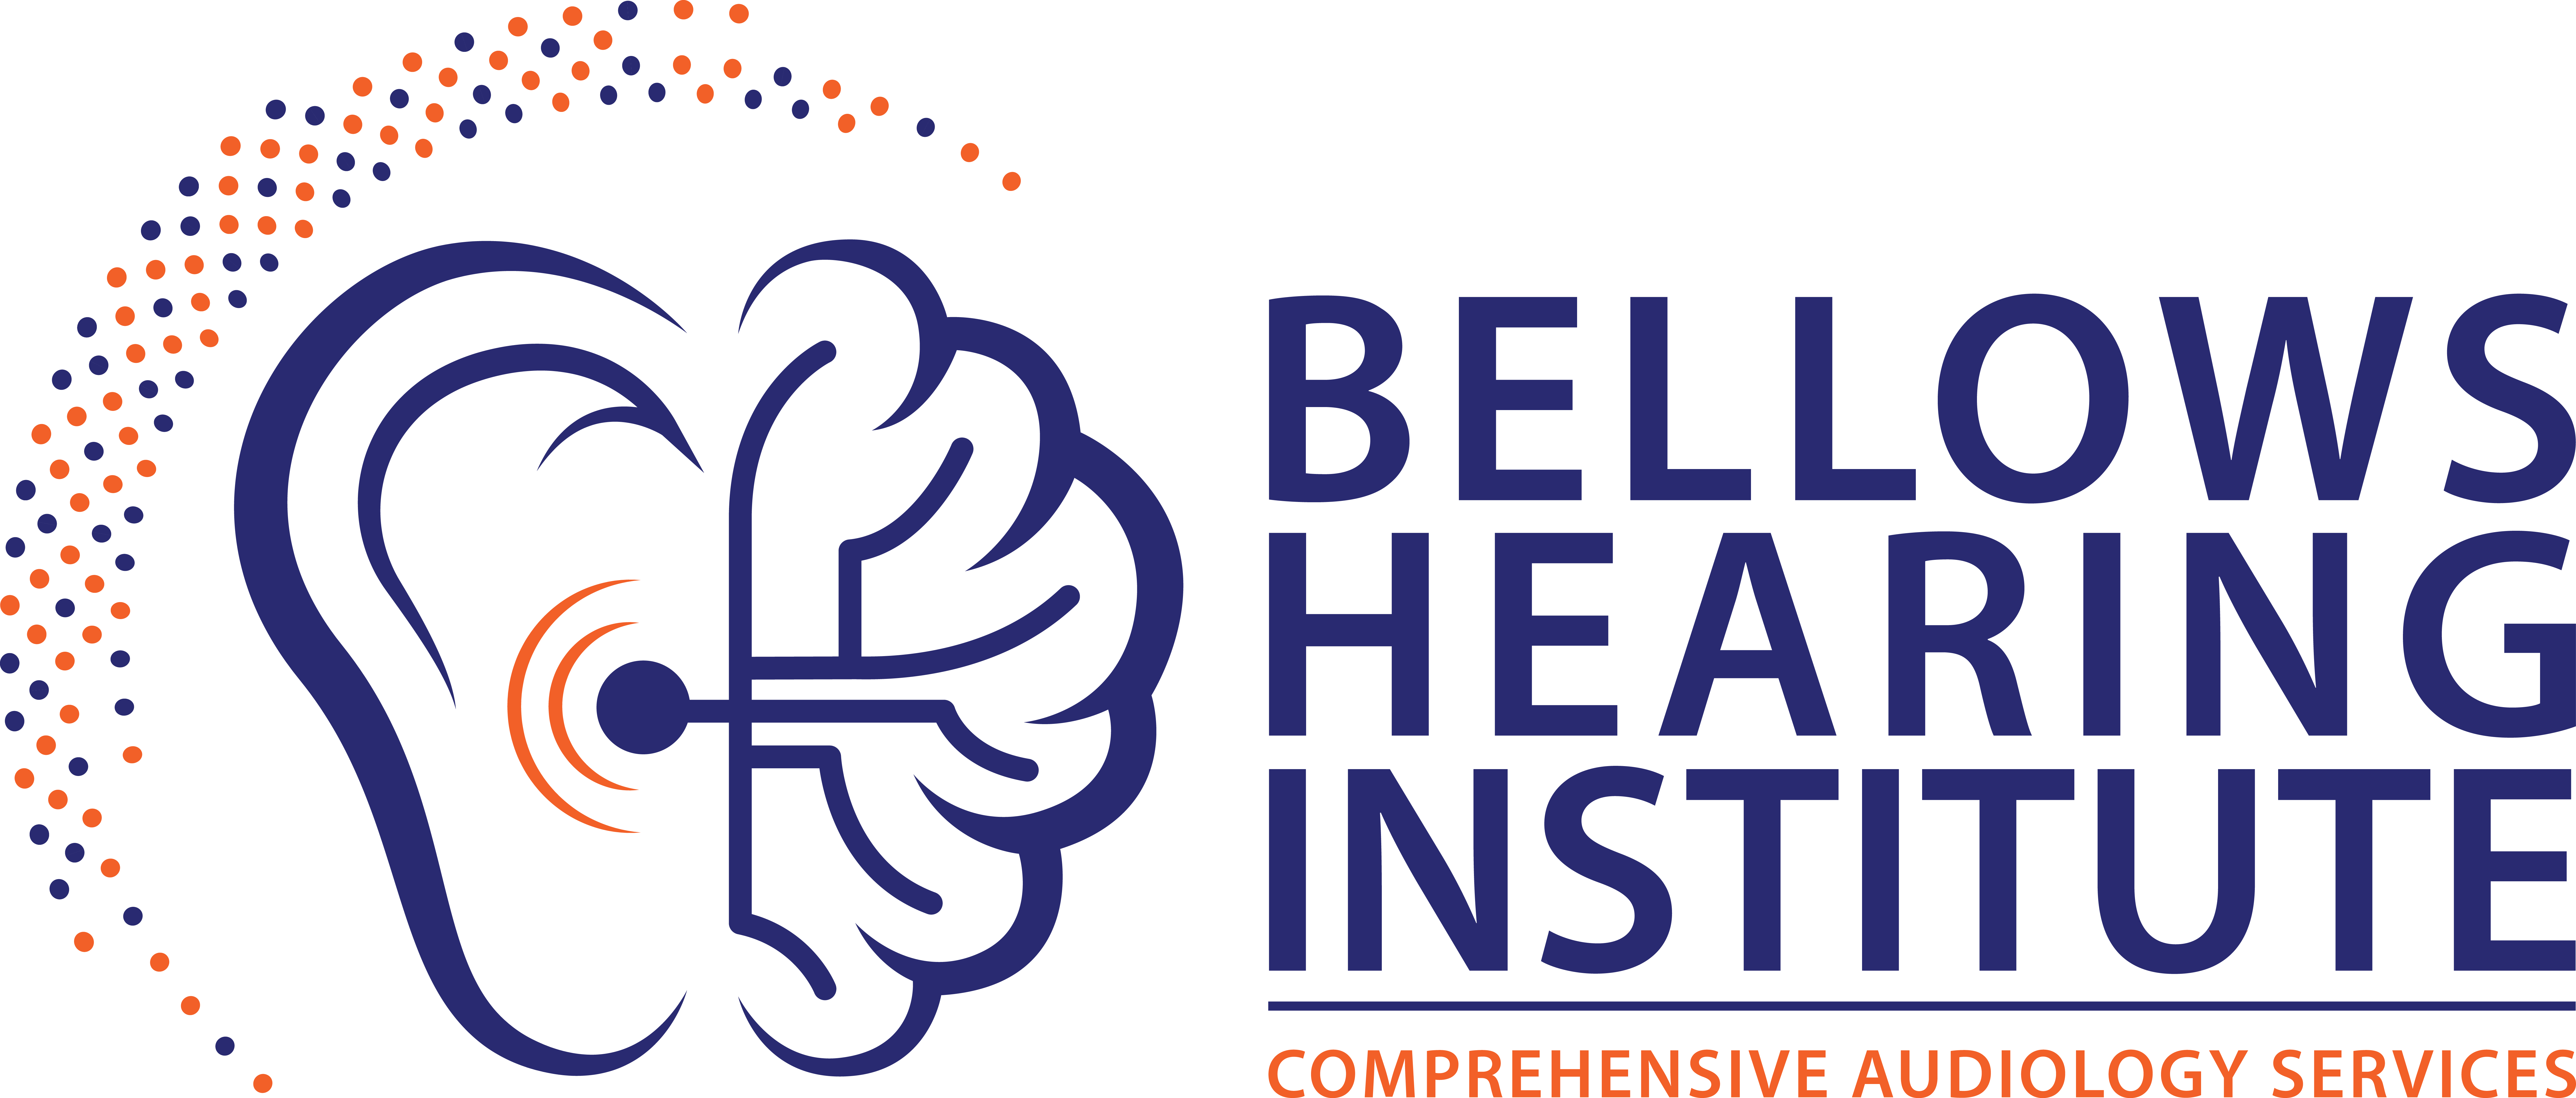 Audiology Logo - Bellows Hearing Institute - Coachella Valley Audiologist